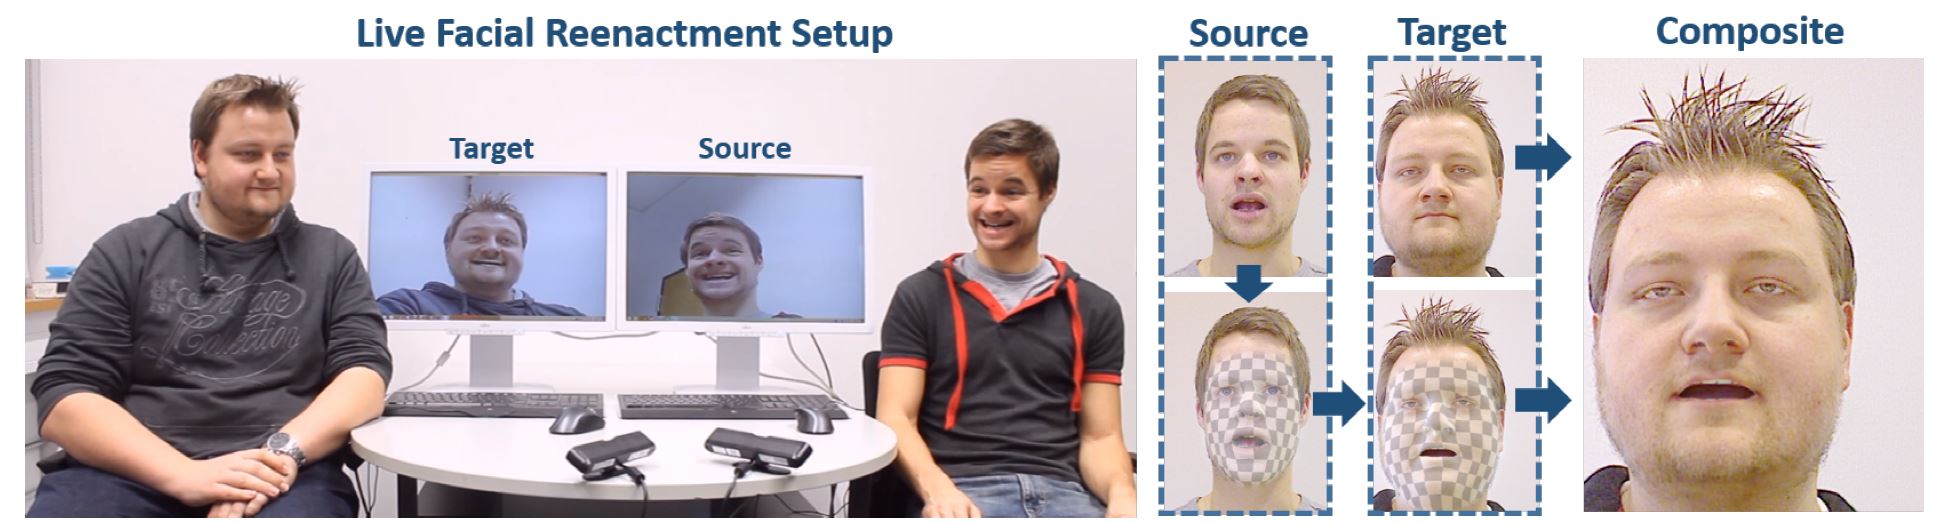 Un transfert d’expressions faciales sur vidéo en temps réel